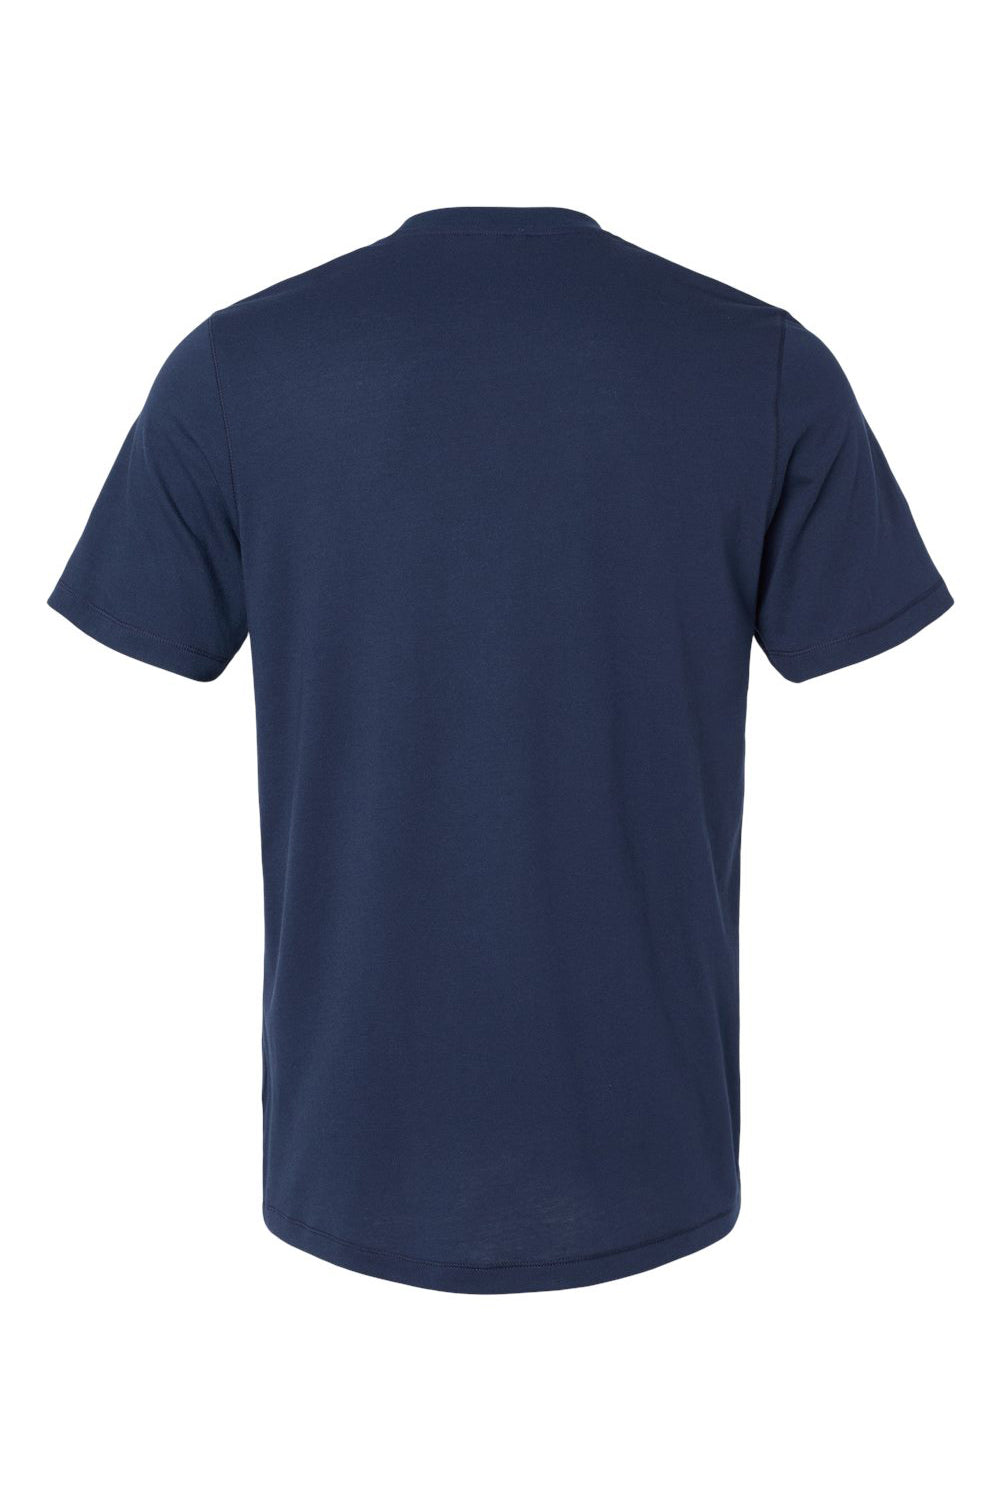 Adidas A556 Mens Short Sleeve Crewneck T-Shirt Collegiate Navy Blue Flat Back